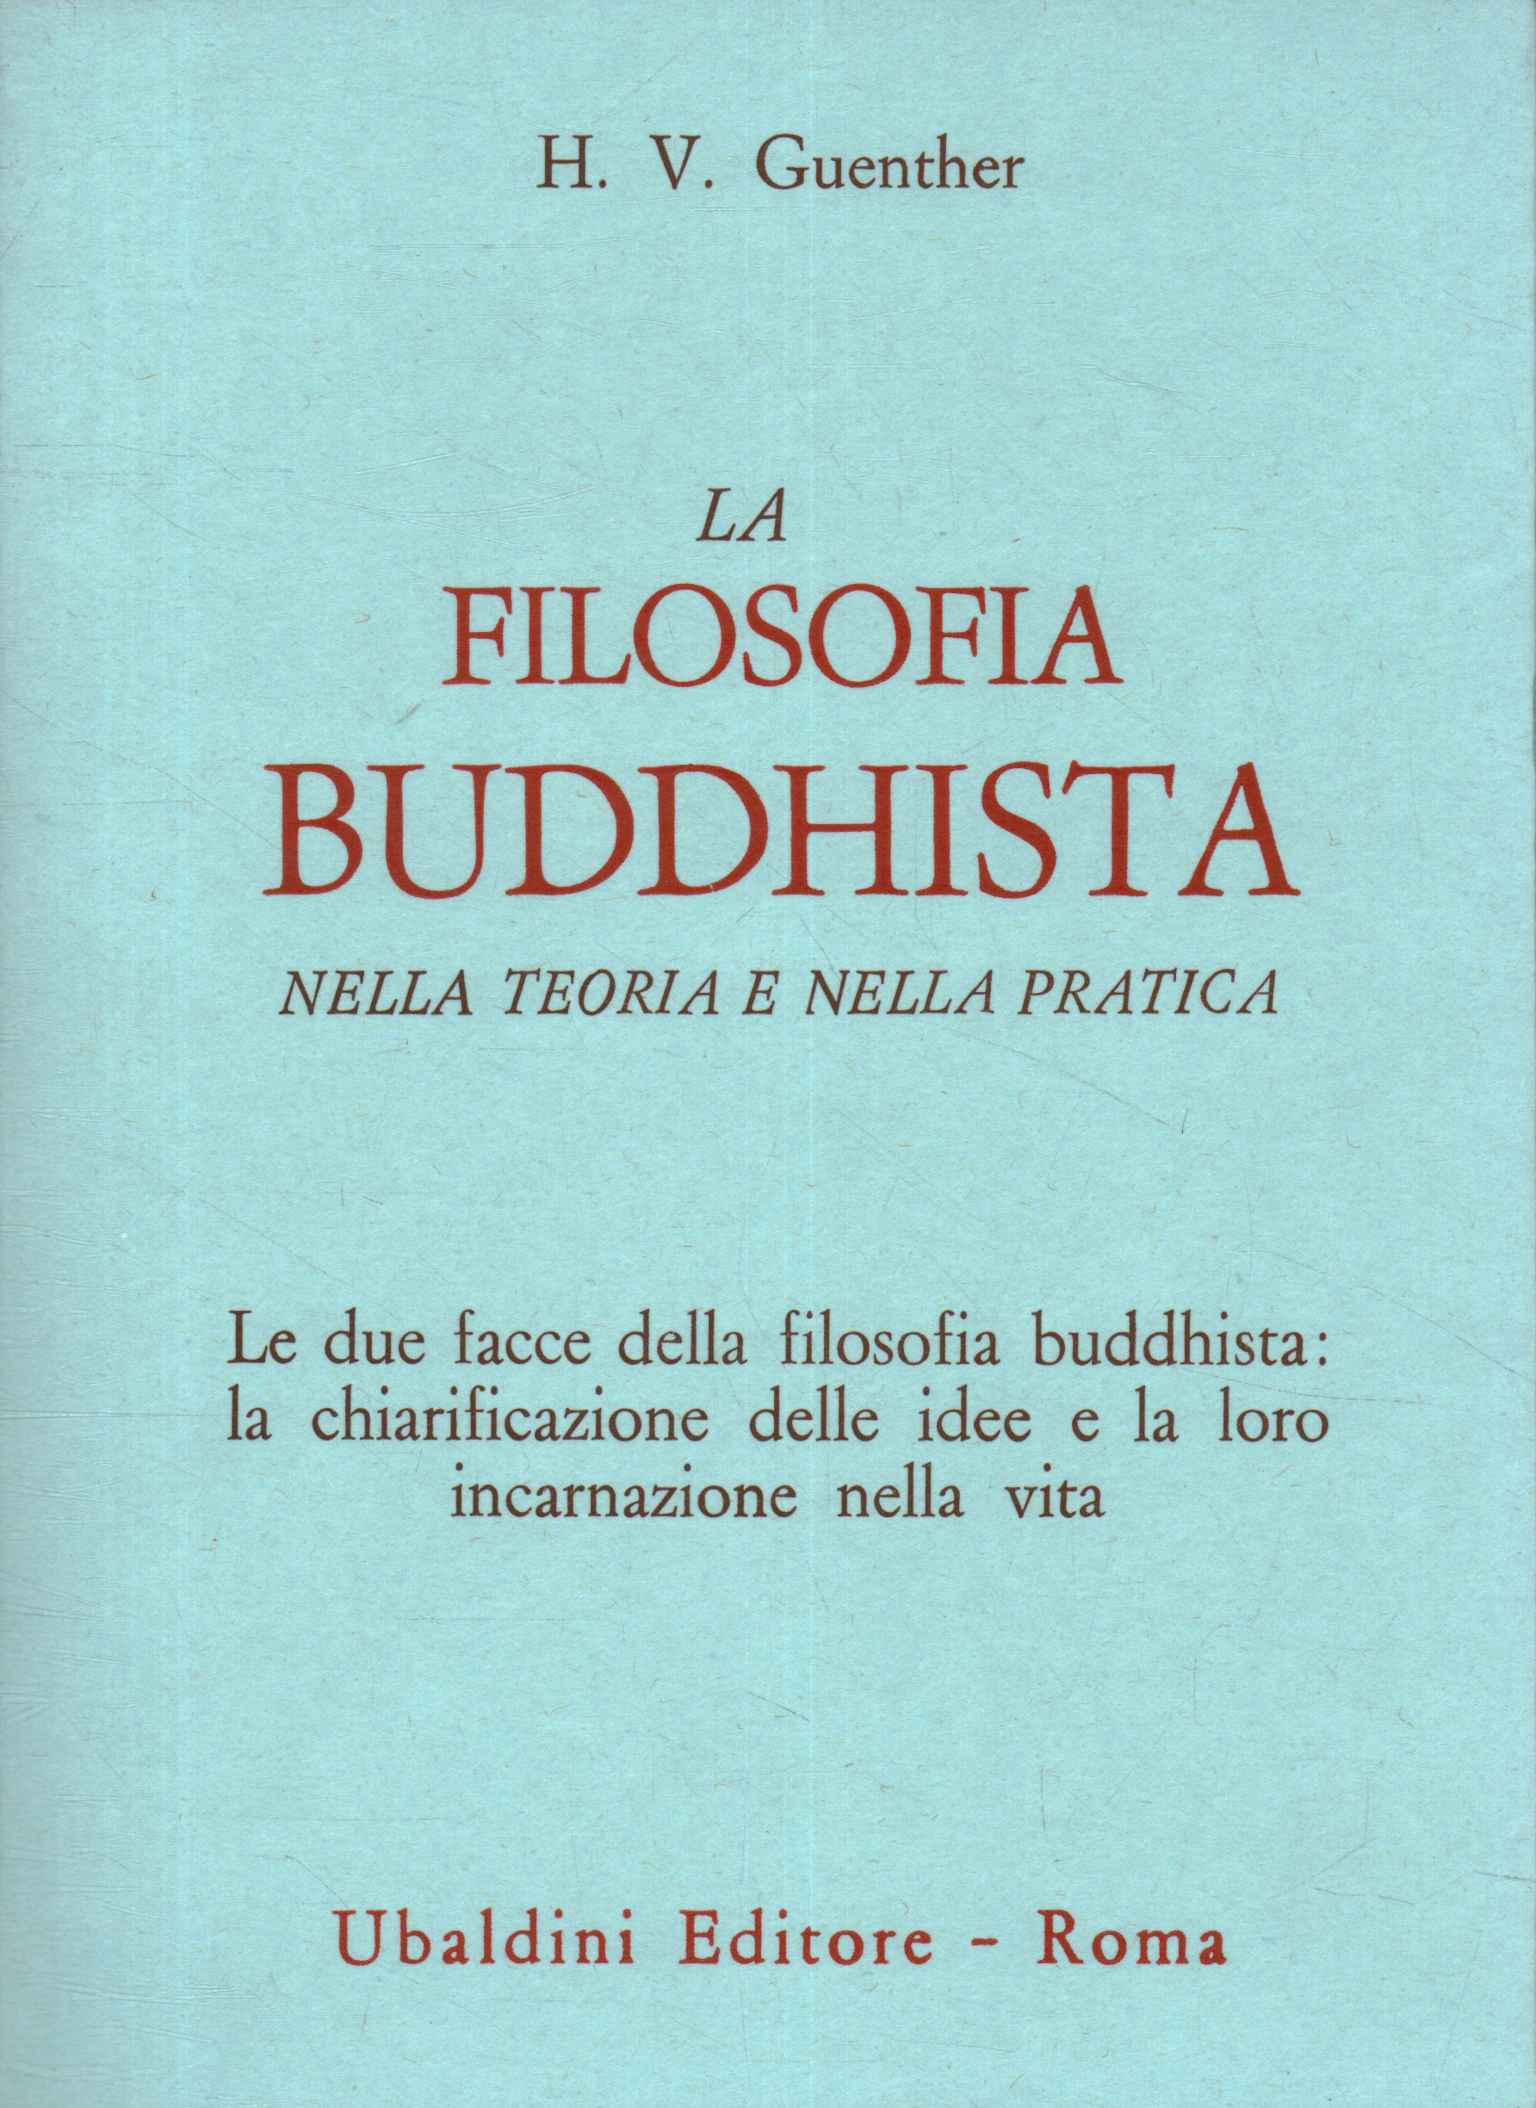 La filosofia Buddhista